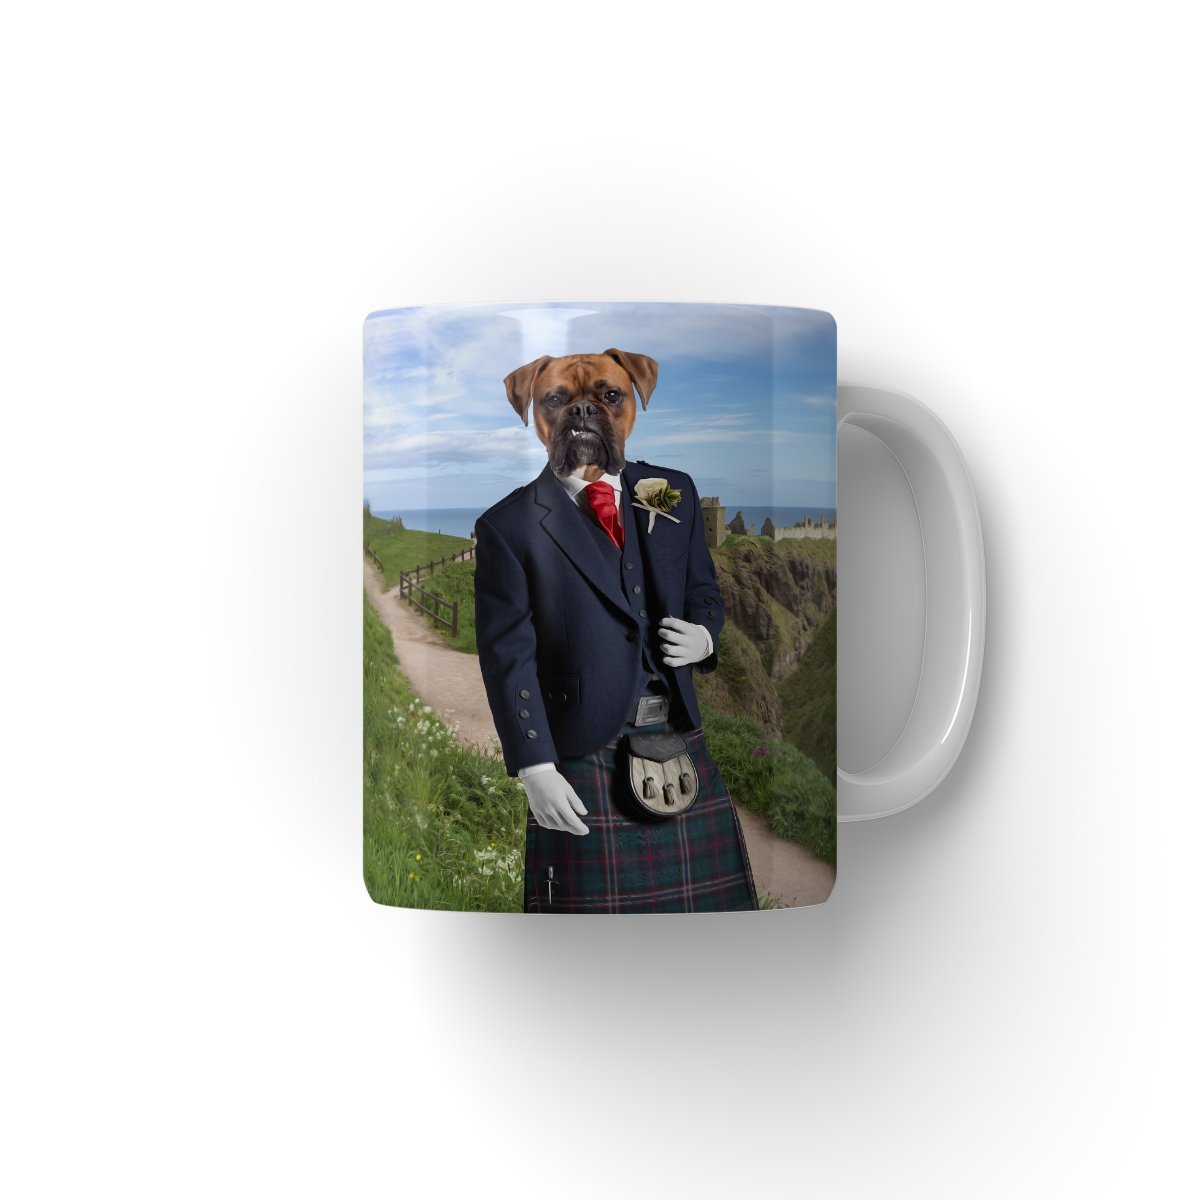 The Scottish Gent: Custom Pet Mug - Paw & Glory - #pet portraits# - #dog portraits# - #pet portraits uk#paw & glory, custom pet portrait Mug,customized dog coffee mugs, personalized mug, coffee mugs personalized, etsy dog mugs, personalized pet coffee mugs